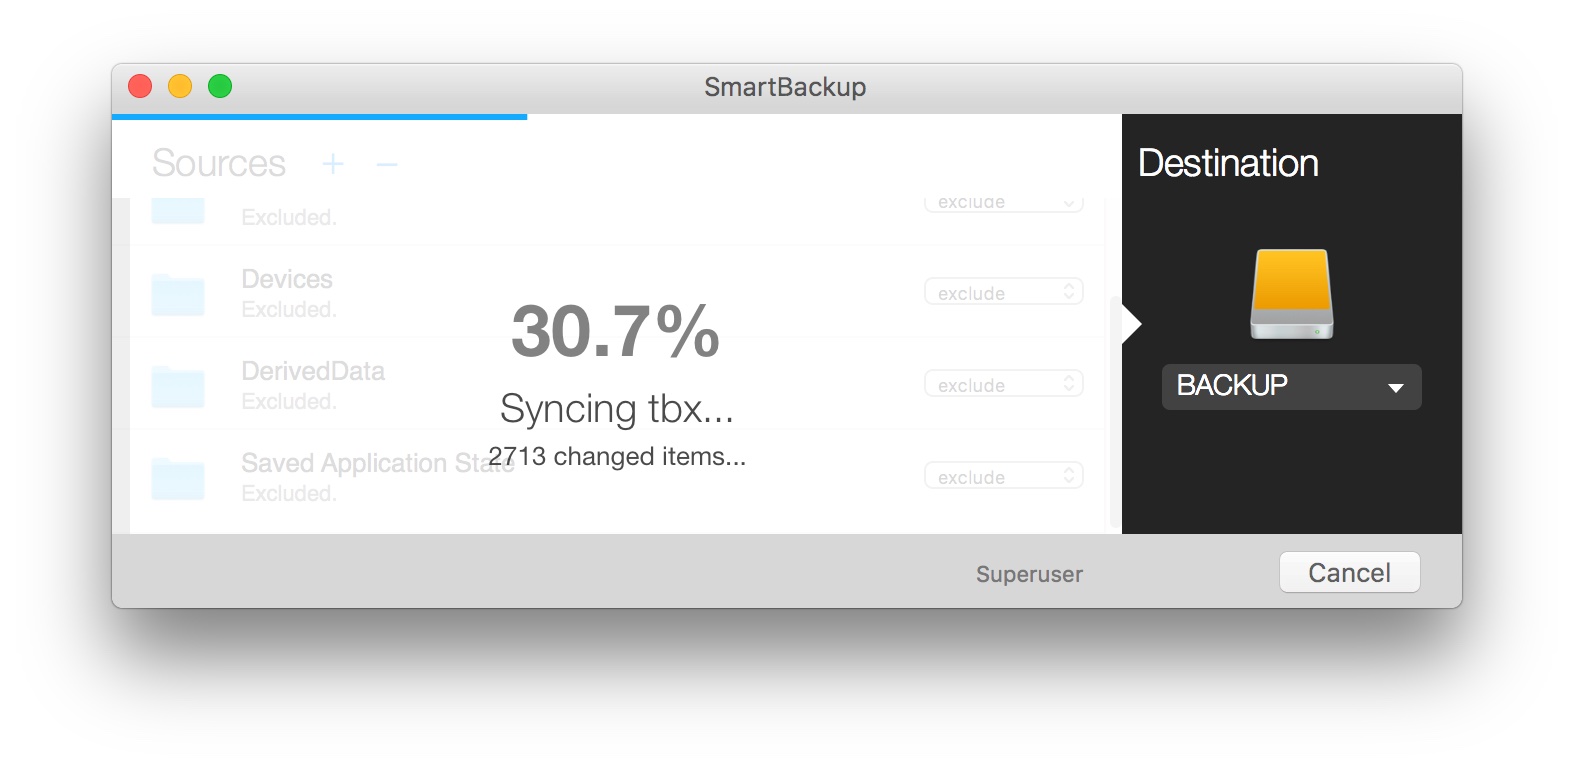 SmartBackup 4.2 is ready for macOS Mojave